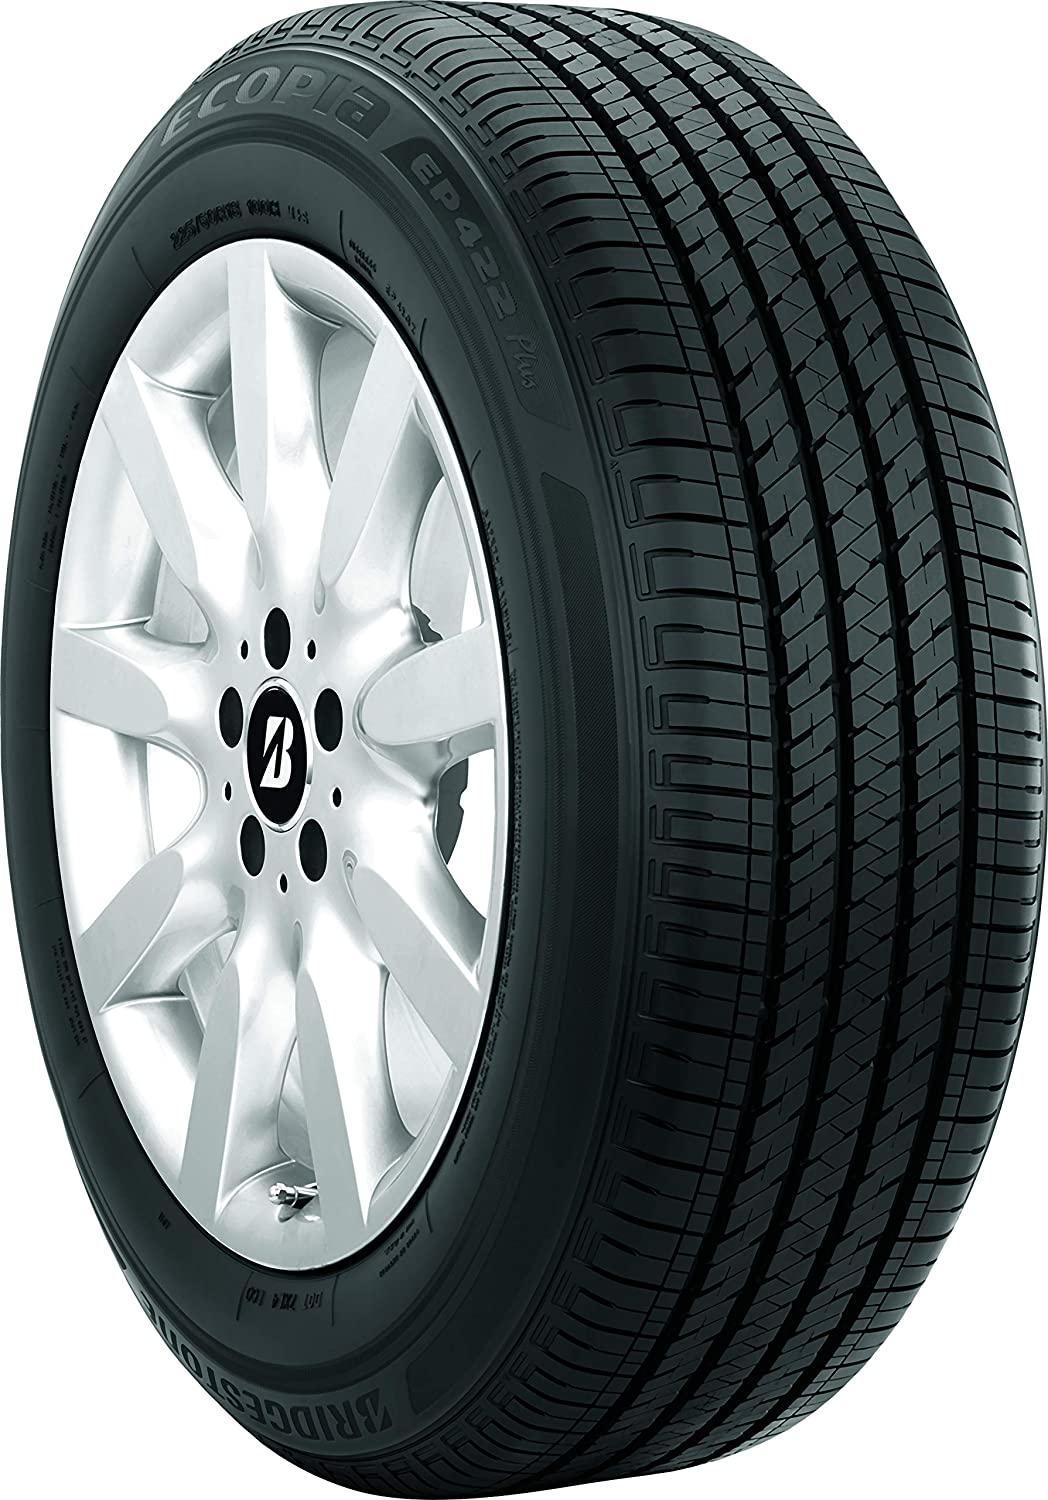 Bridgestone Ecopia Discount Tire